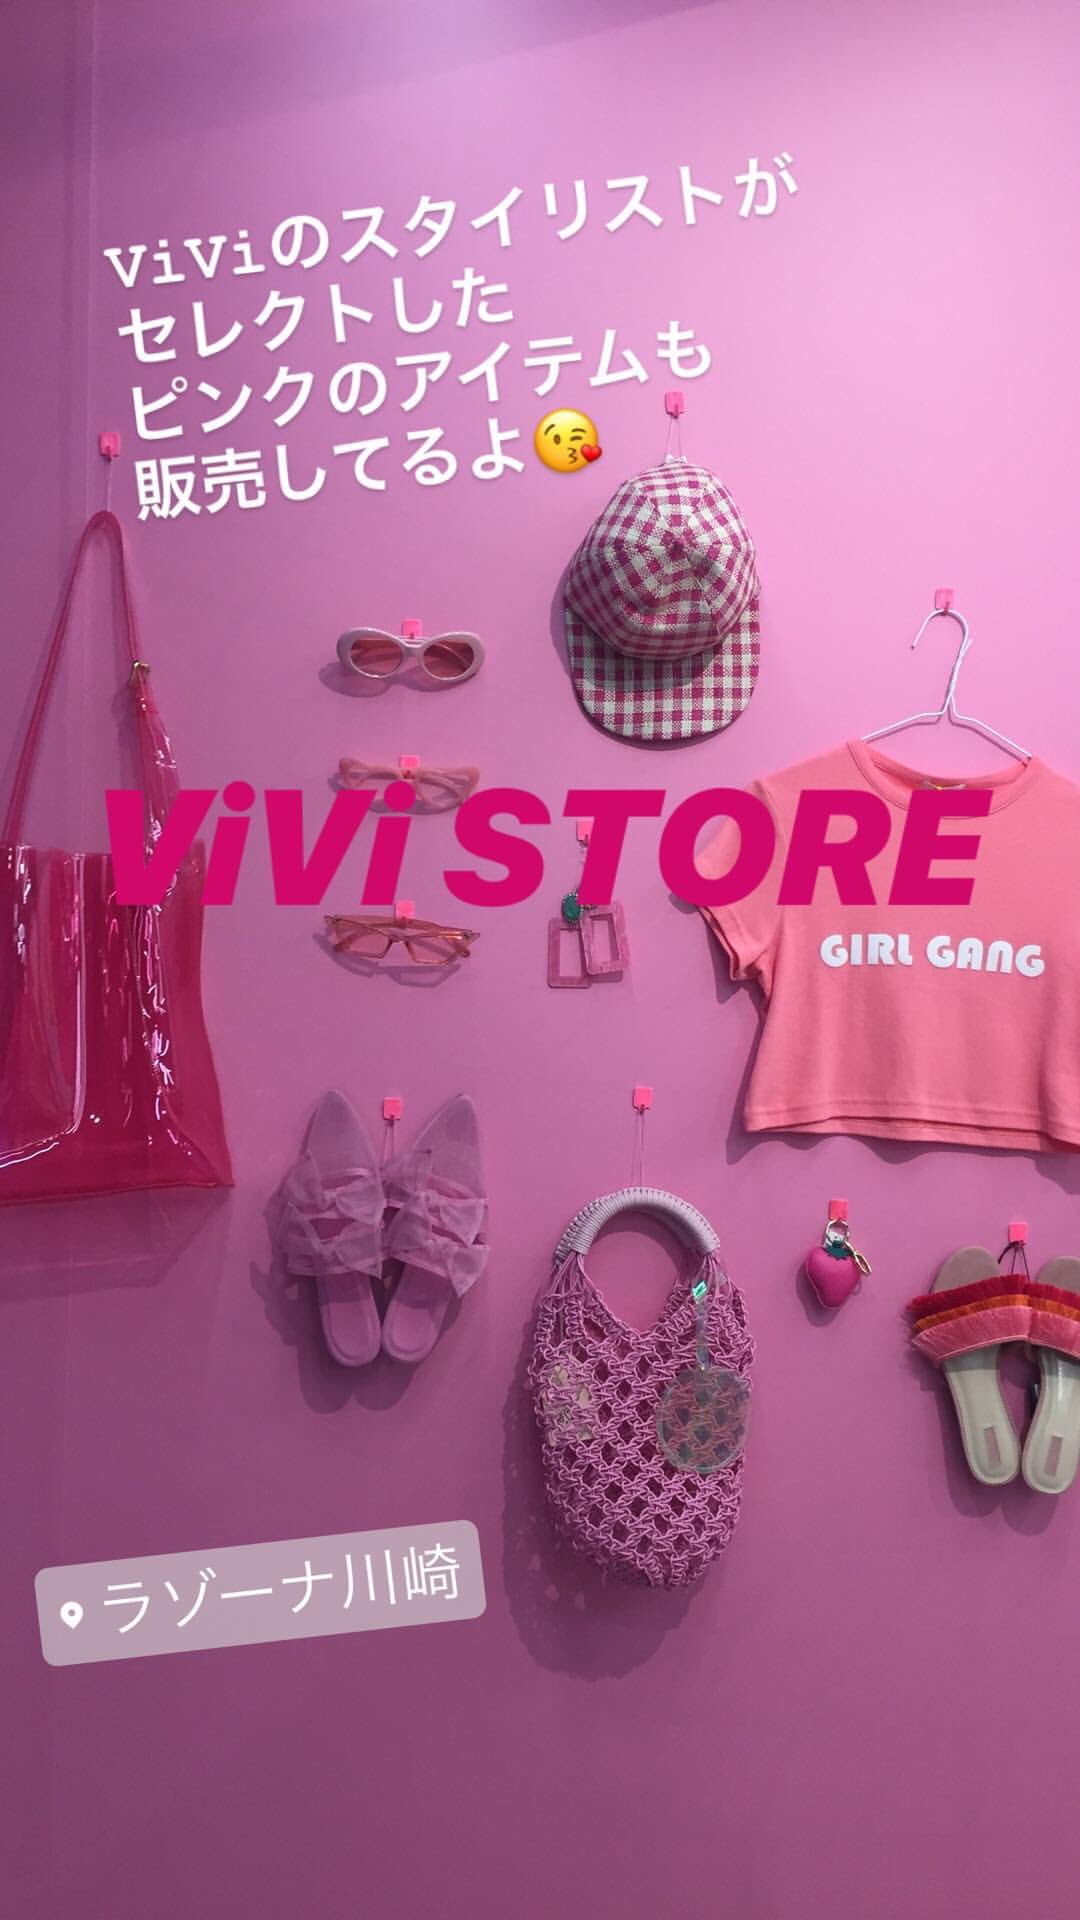 ViVi on Twitter: "【ViViのlimited shop】 本日、ViVi史上初の限定ショップを、 ラゾーナ川崎にてopenし